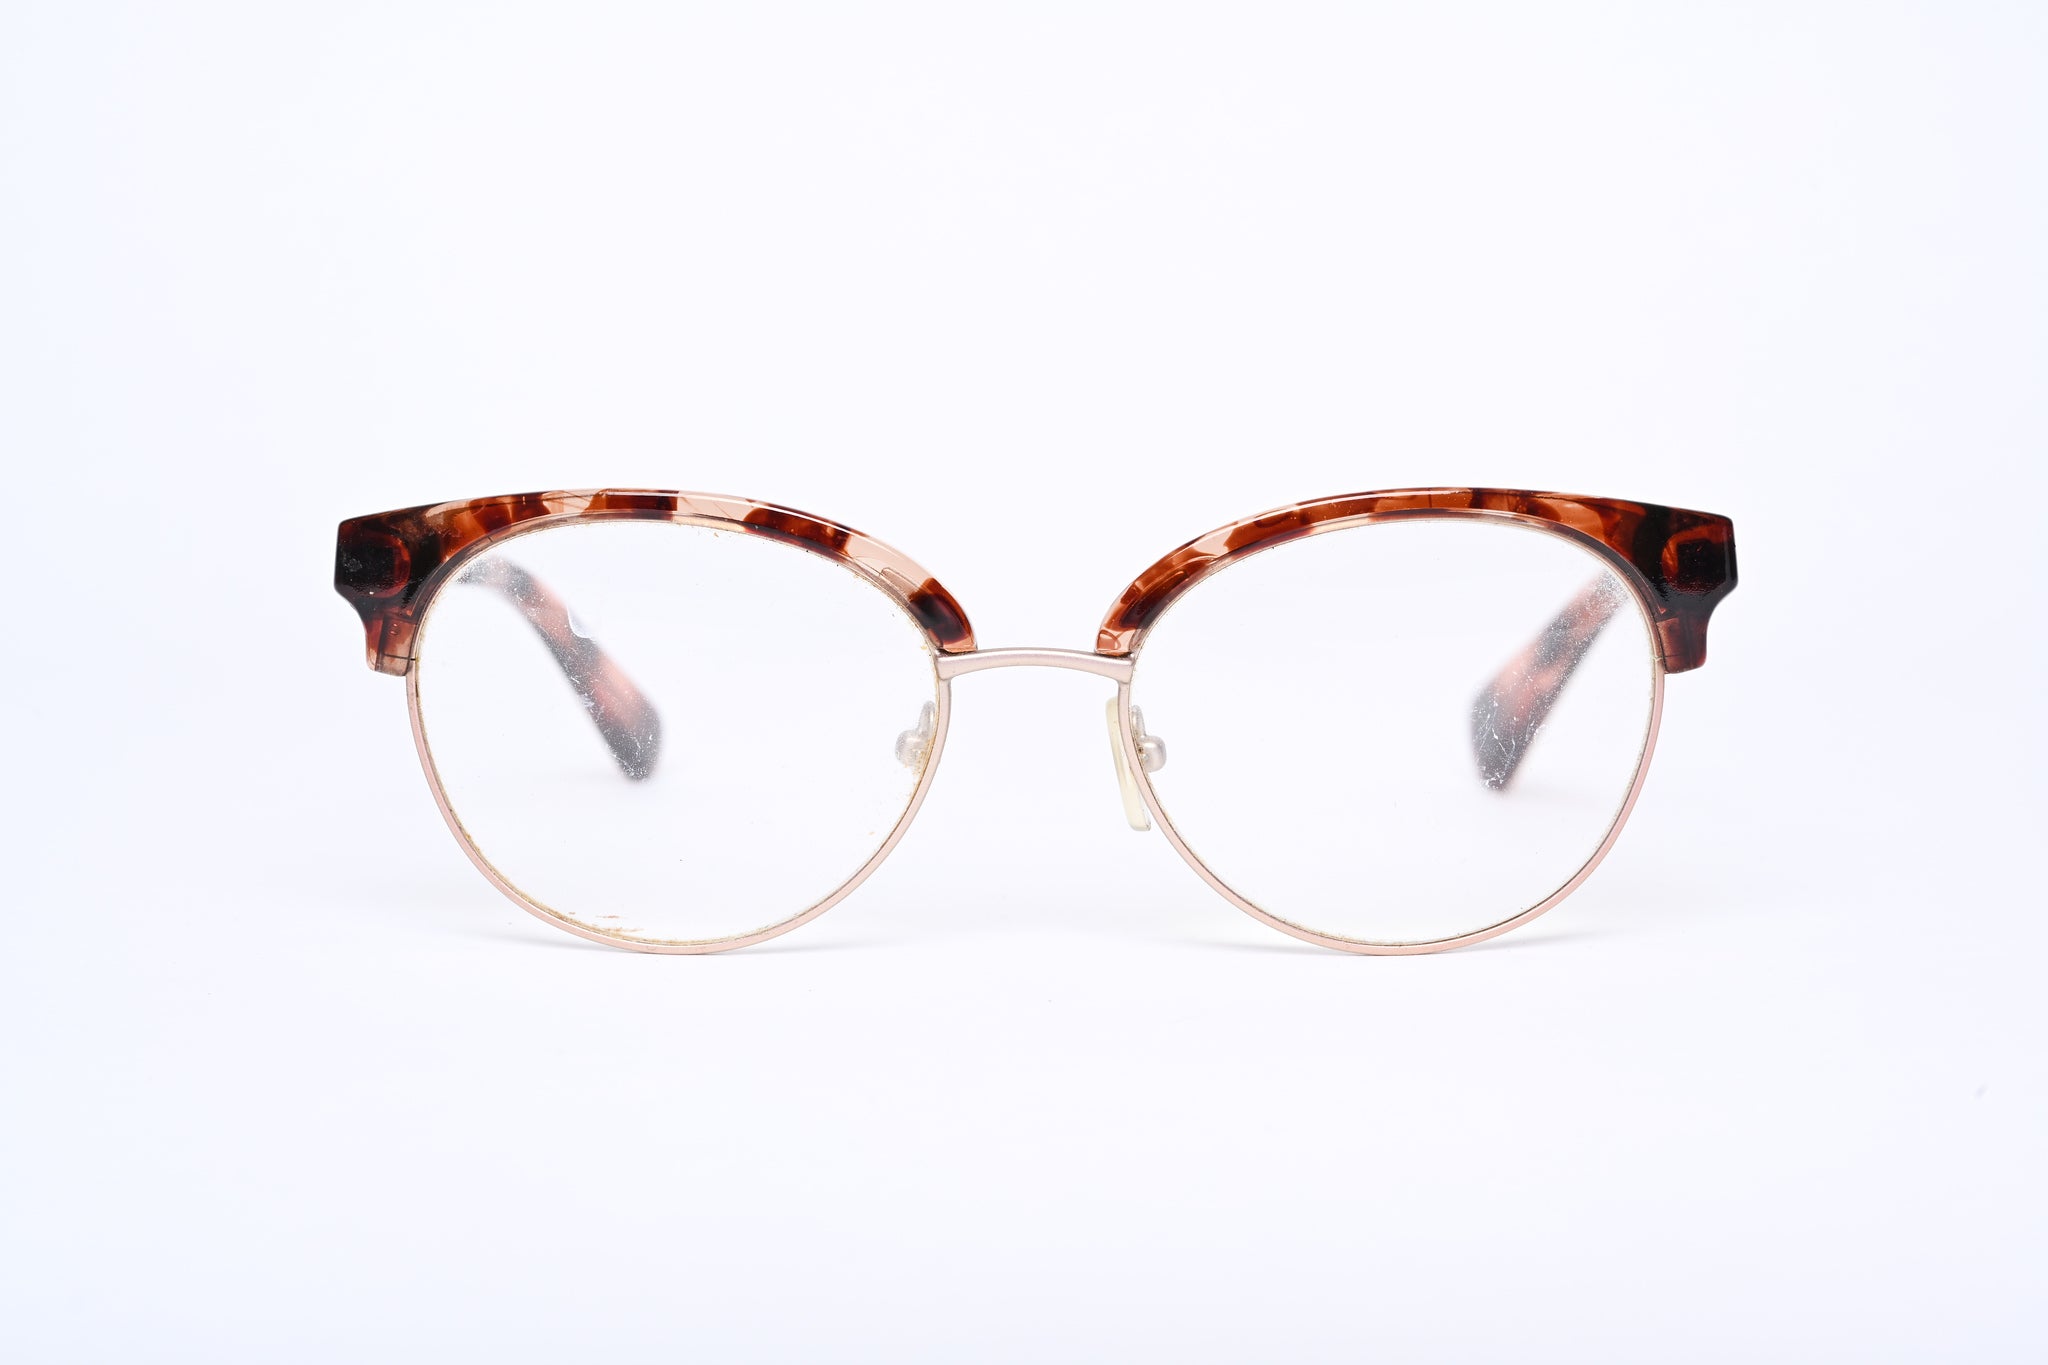 Micheal Kors Glasses. Cheap Michael Kors Glasses. Sustainable glasses. Cheap designer glasses. 